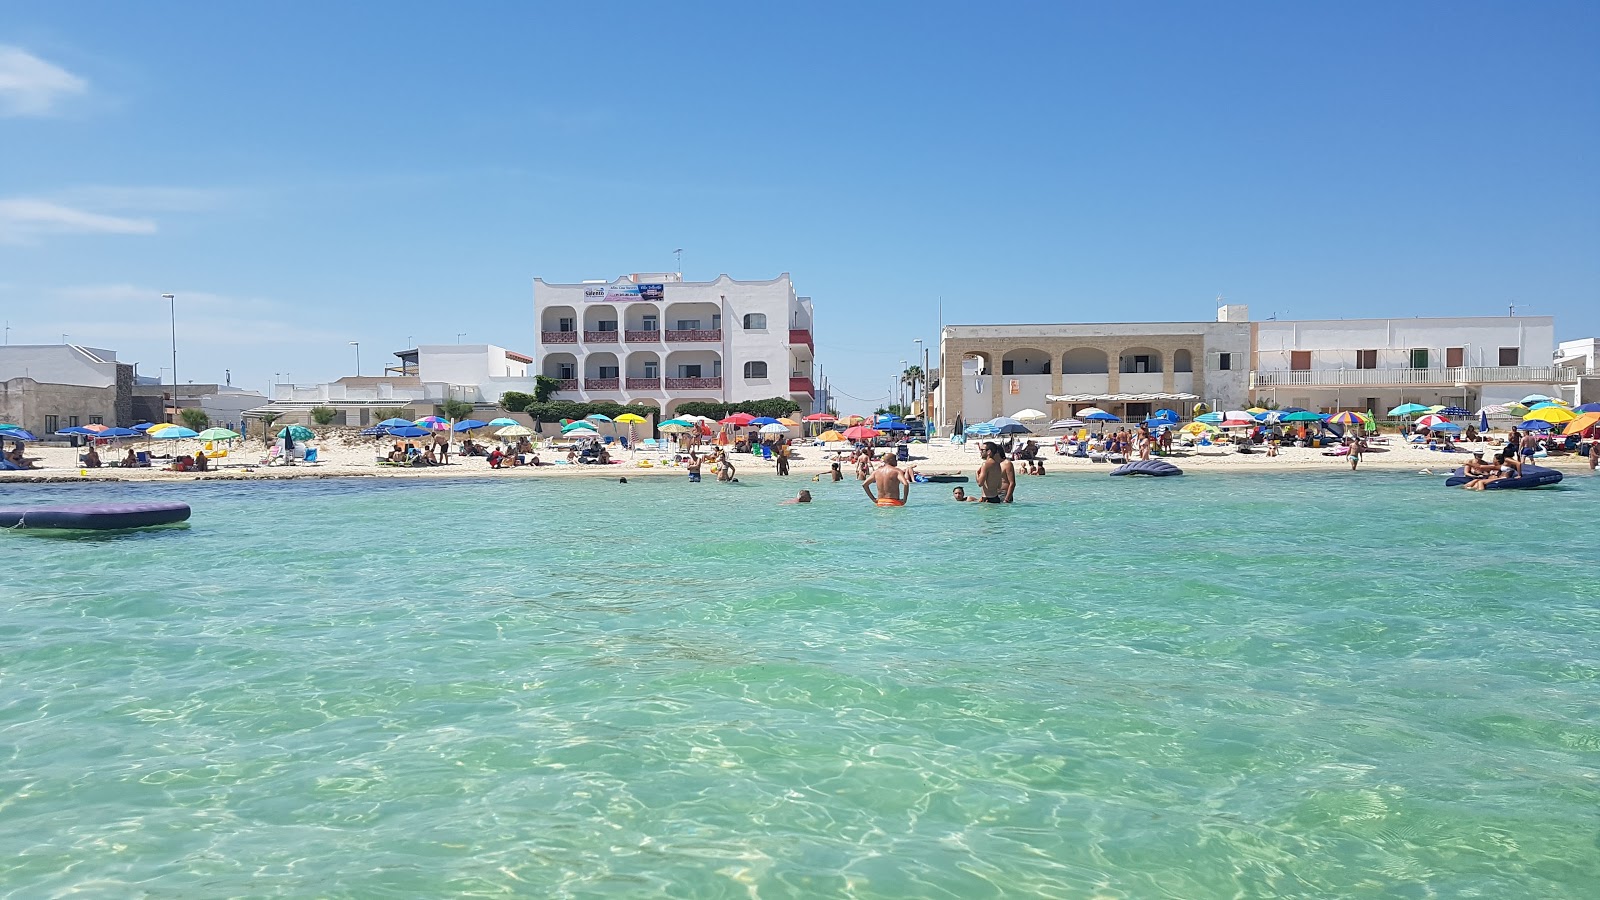 Photo of Spiaggia Porto Cesareo with spacious shore